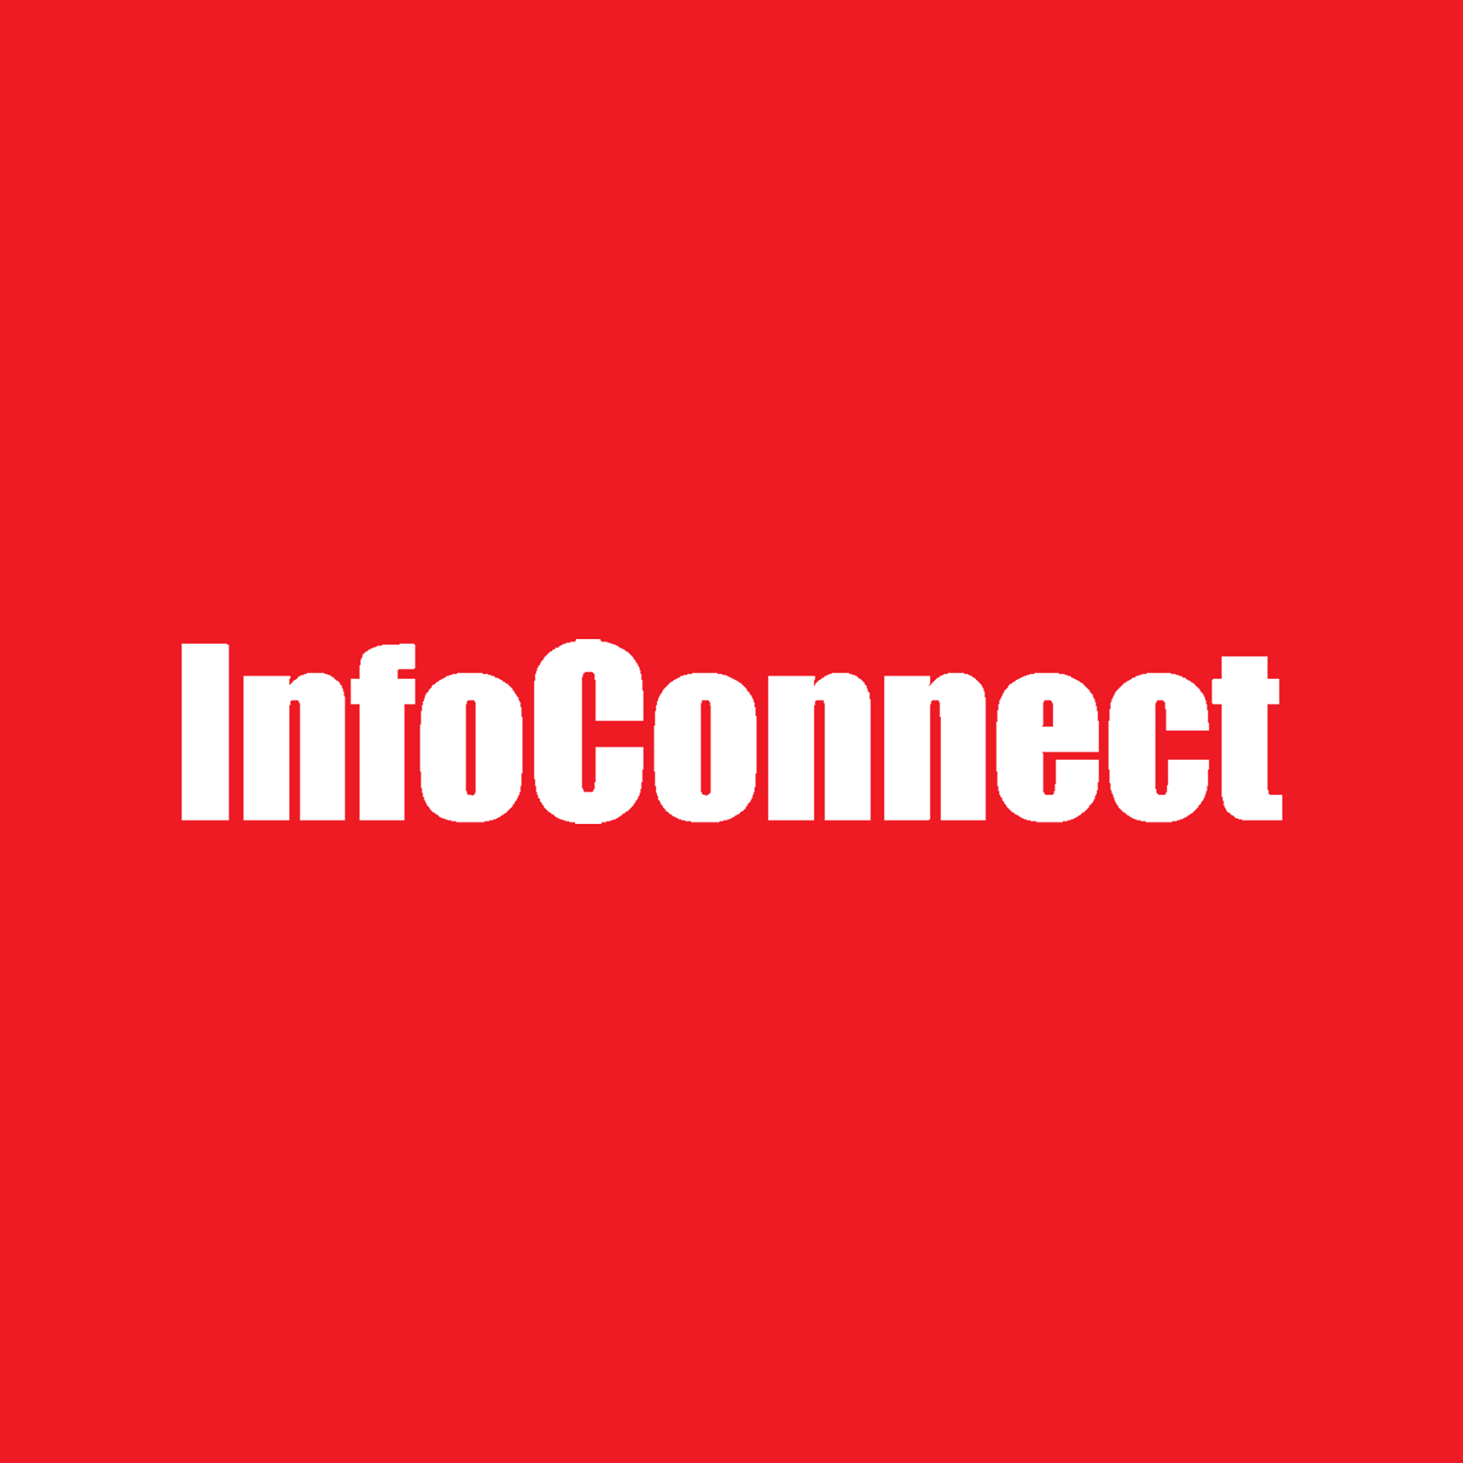 InfoConnect